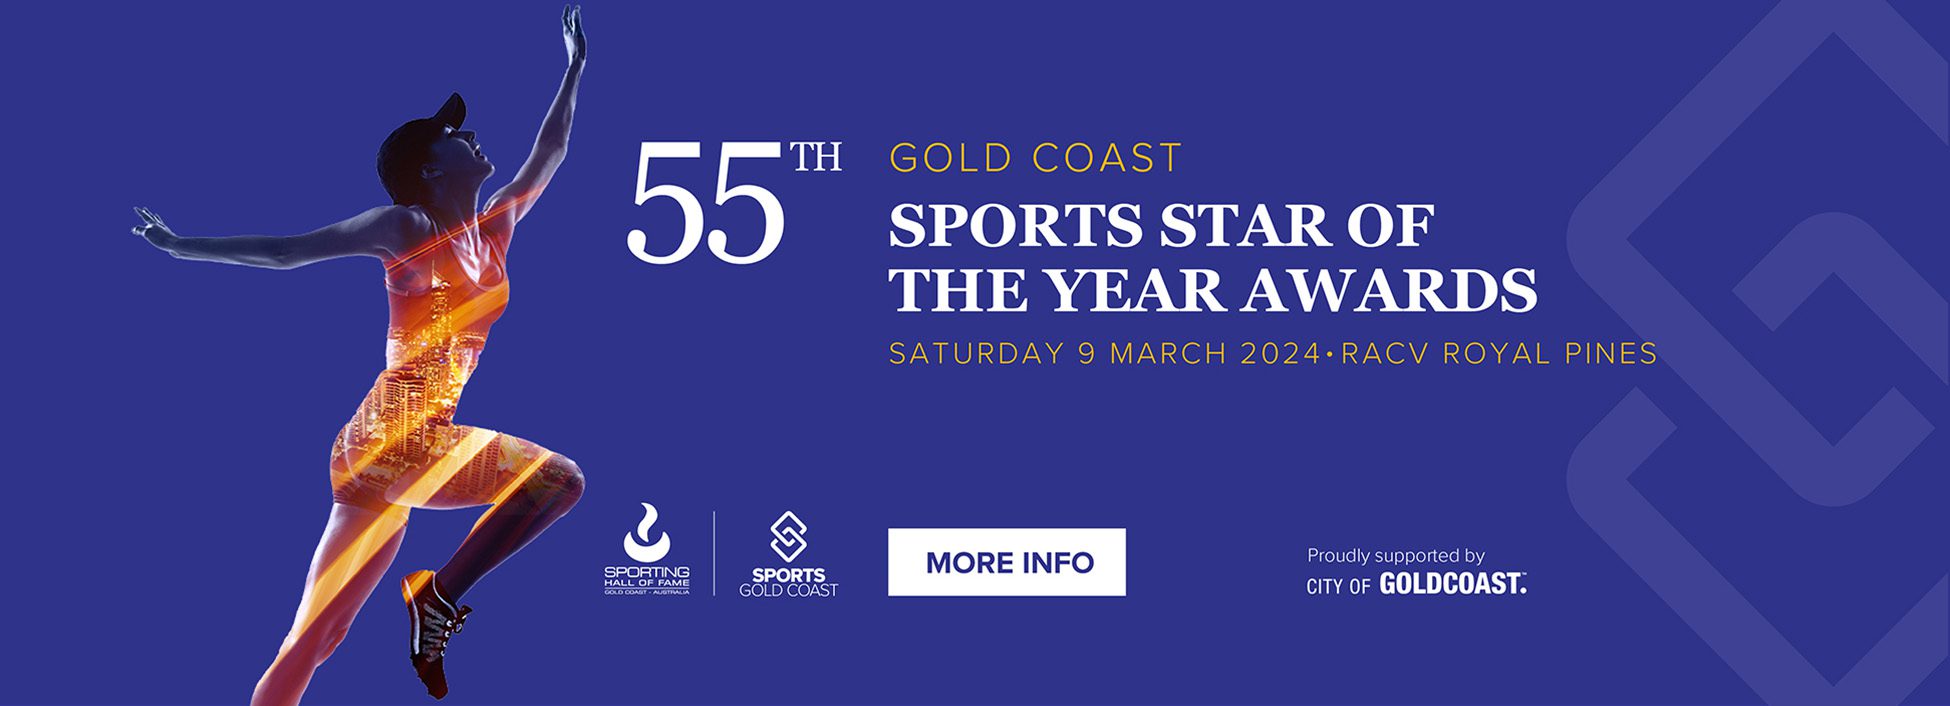 Gold Coast Sports Star Awards 2024